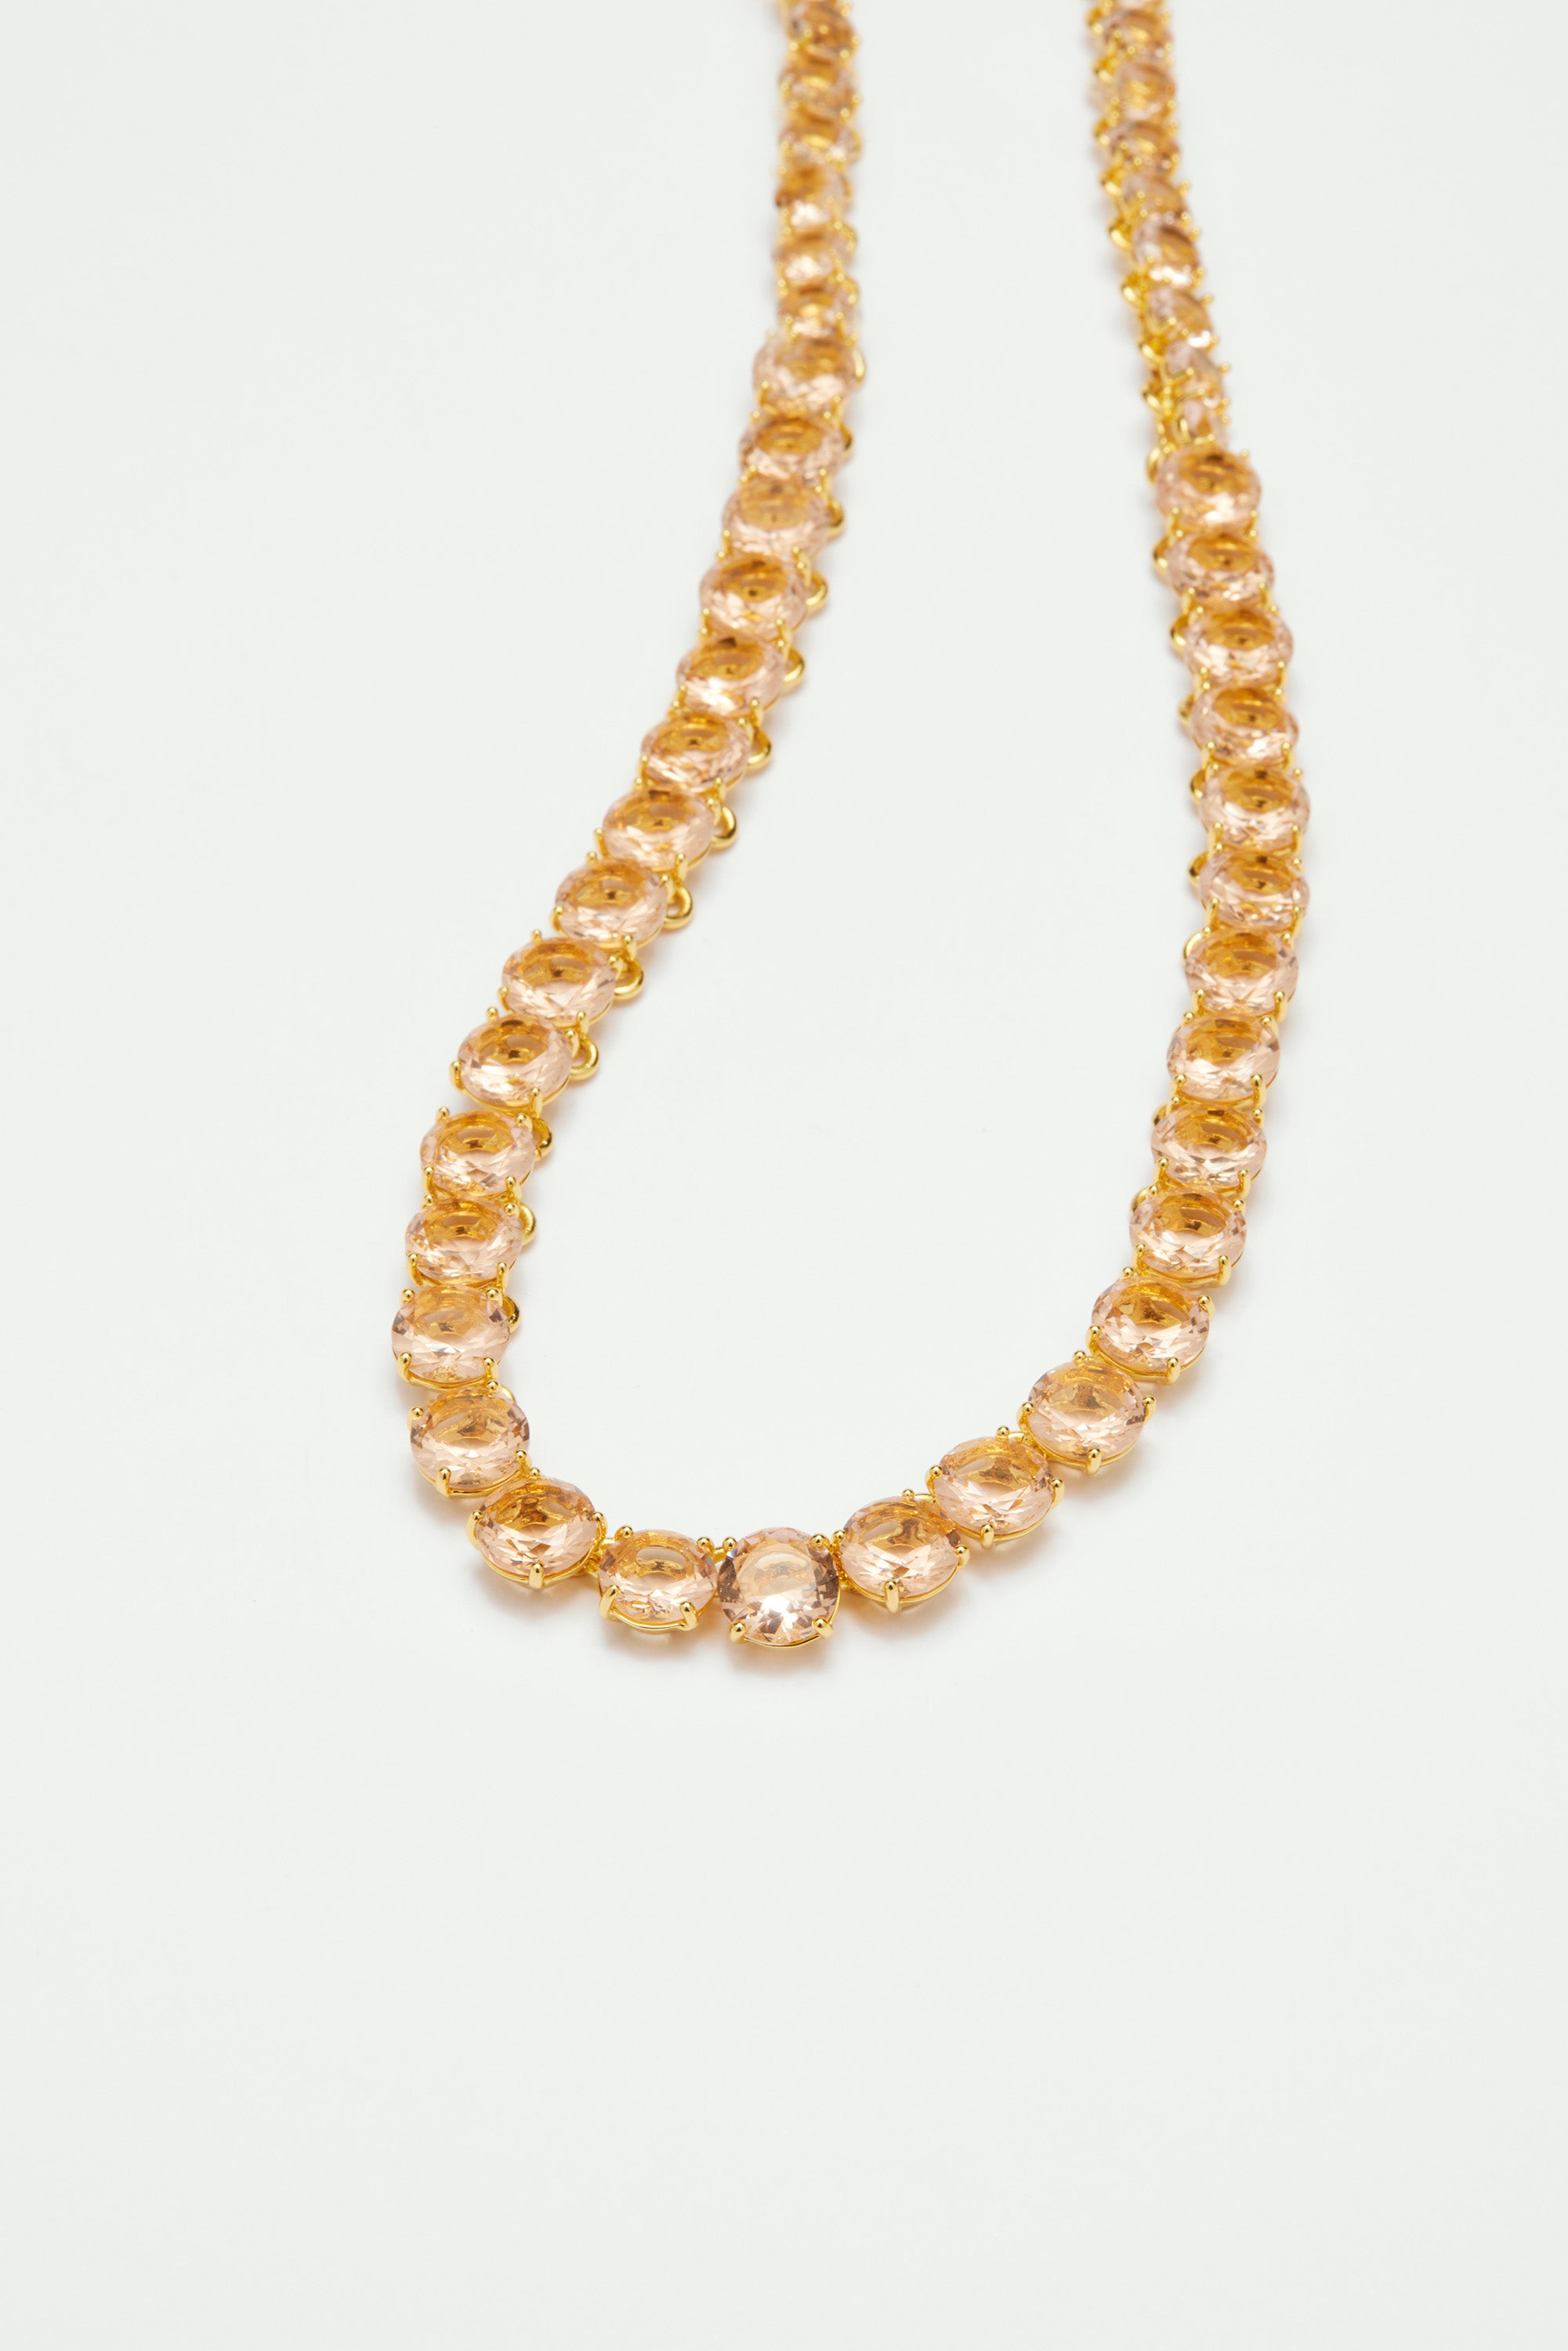 Apricot pink diamantine round stone choker necklace